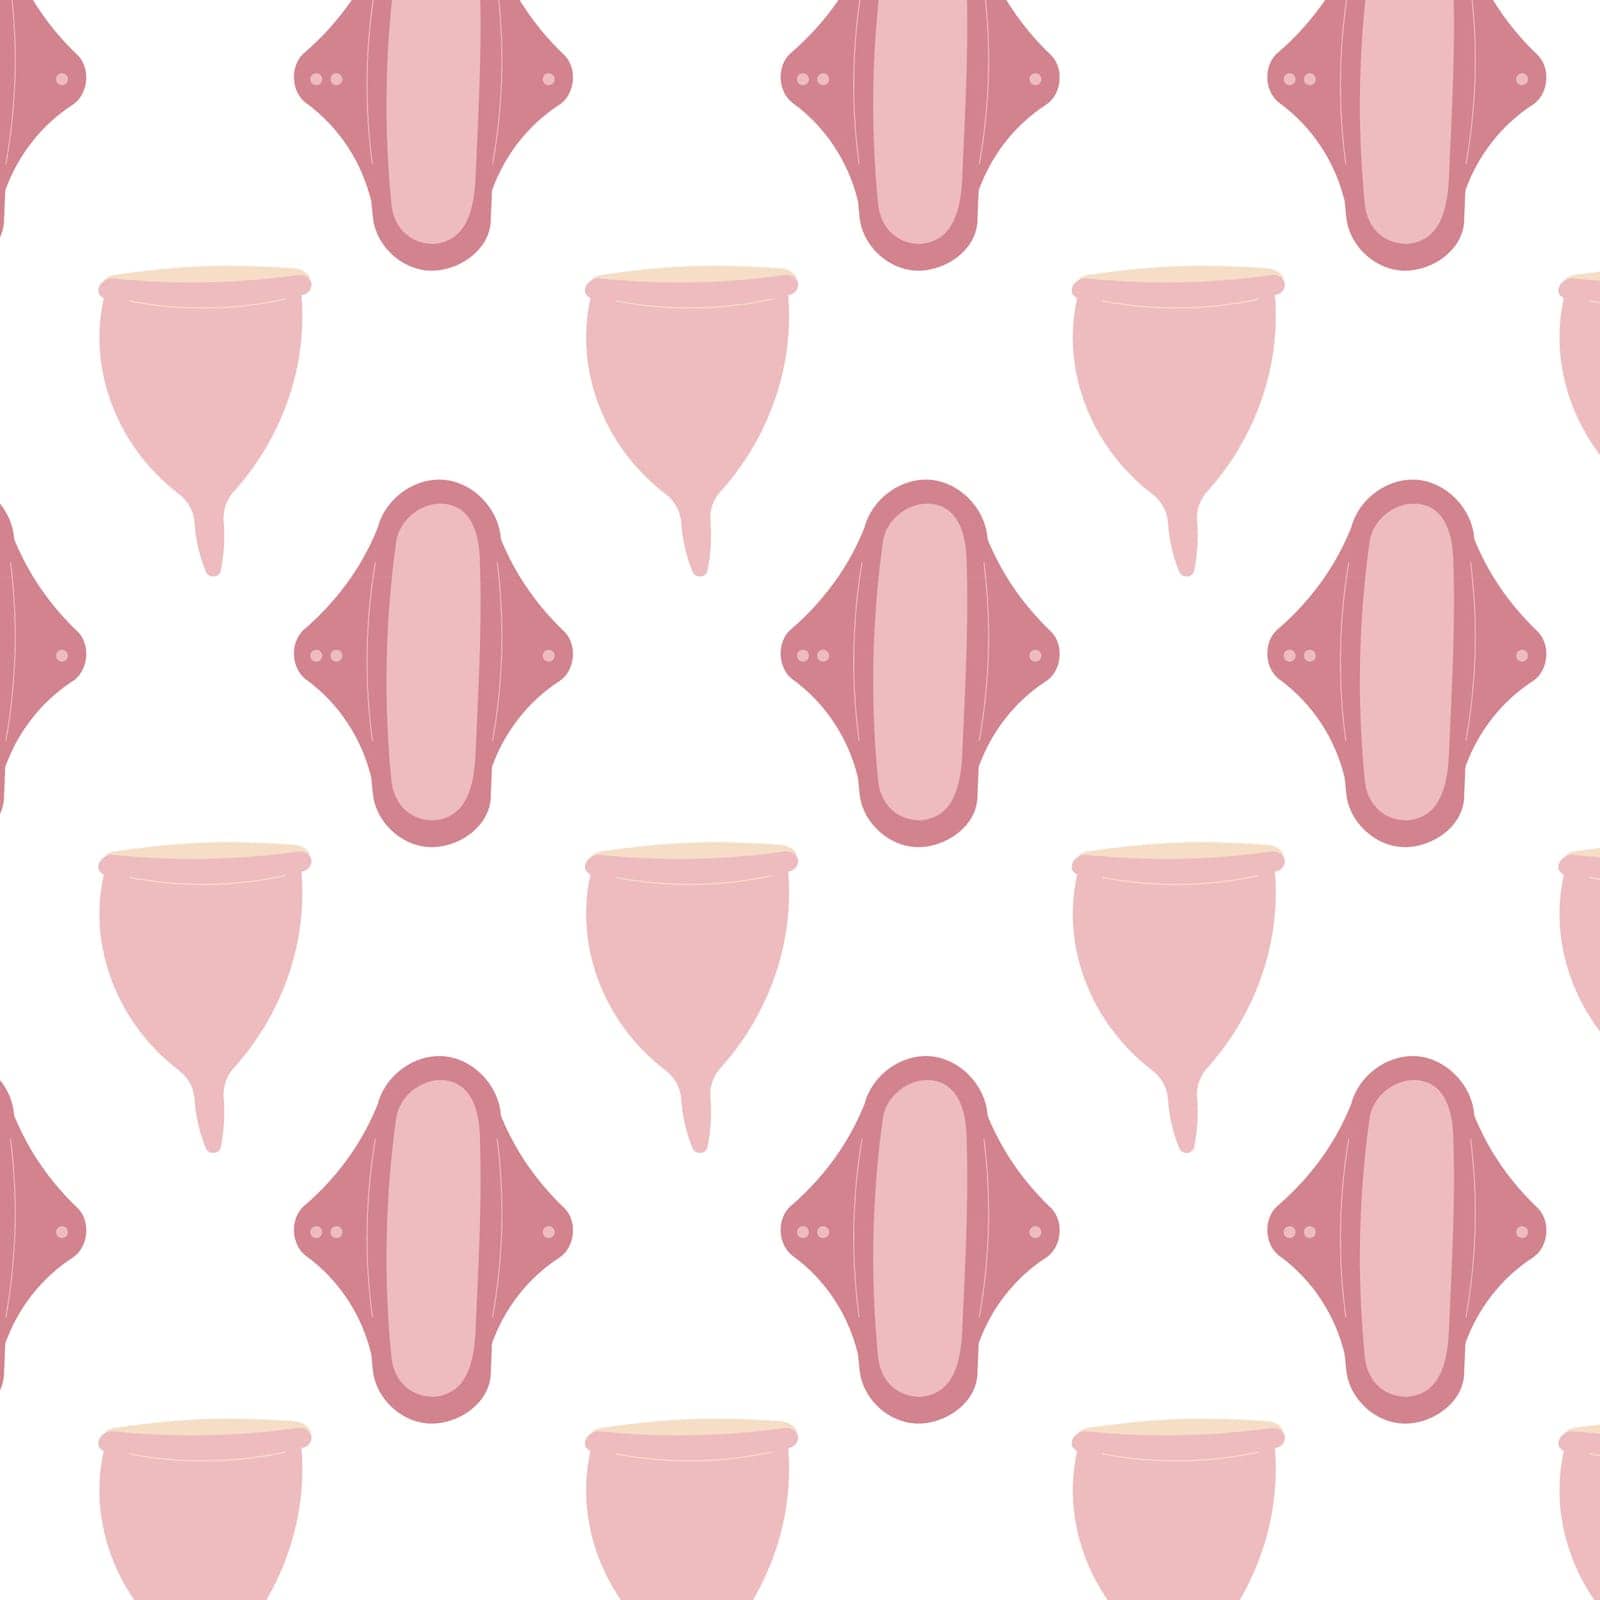 feminine hygiene menstrual cup pad eco bio zero waste pattern textile vector